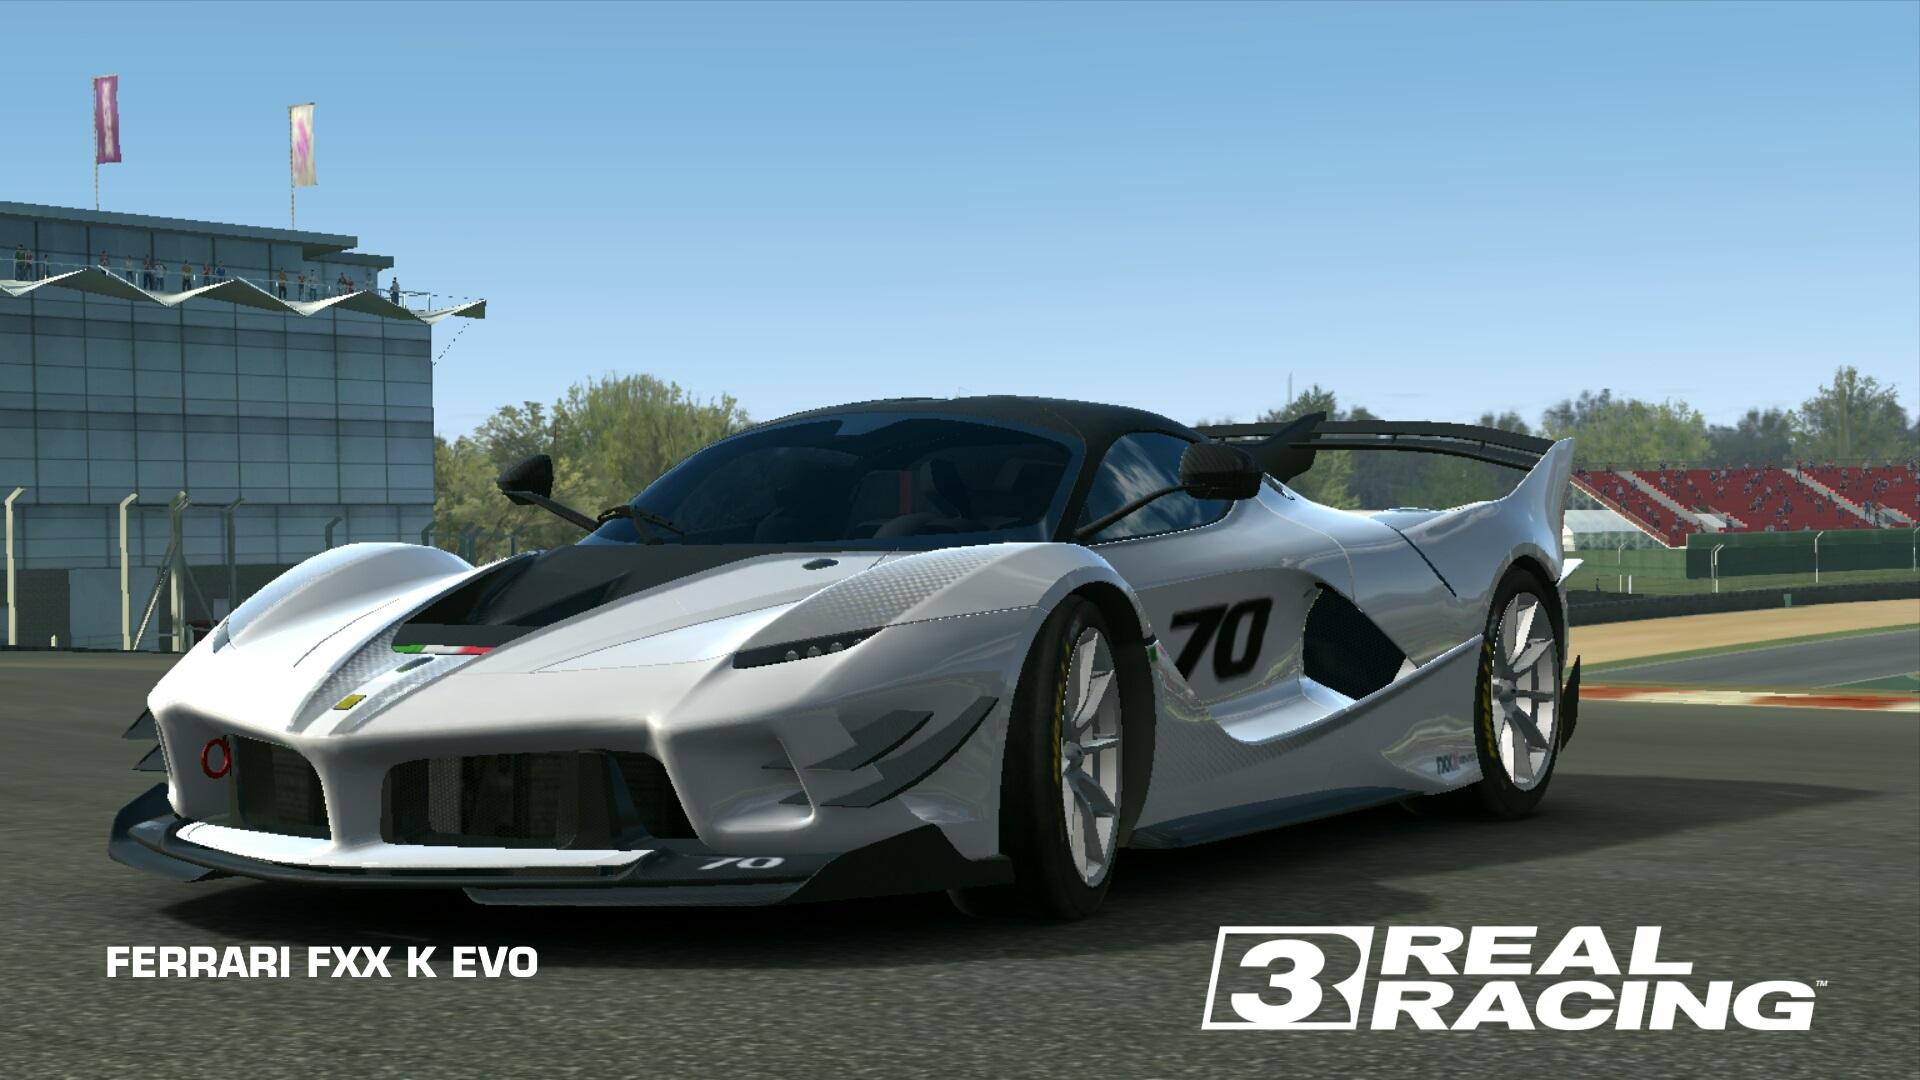 FERRARI FXX K EVO. Real Racing 3